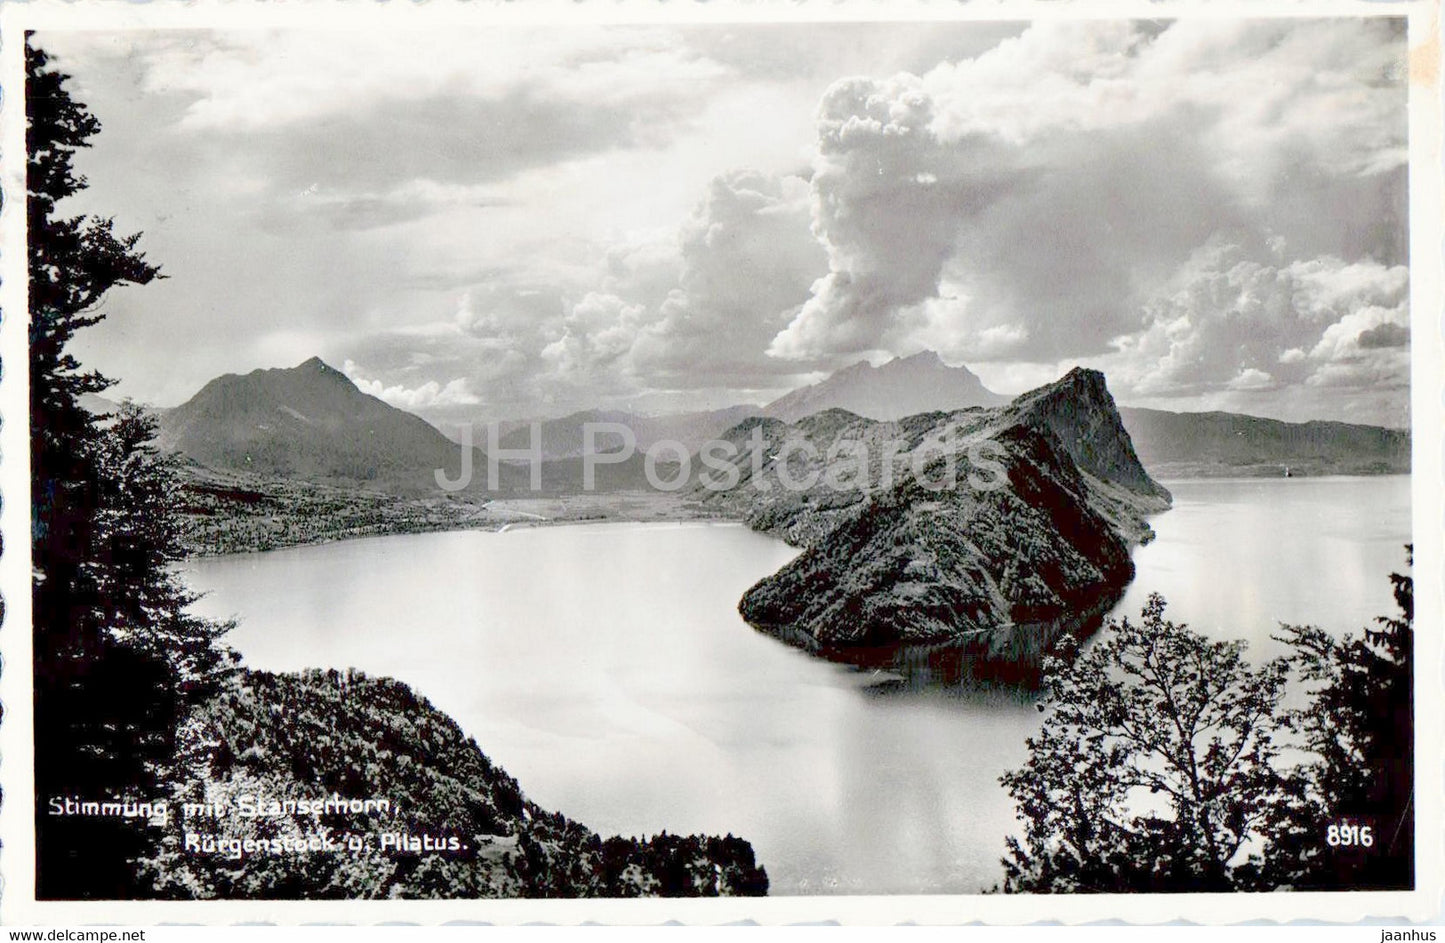 Stimmung mit Stanserhorn - Rugenstock u Pilatus - 8916 - 1947 - old postcard - Switzerland - used - JH Postcards